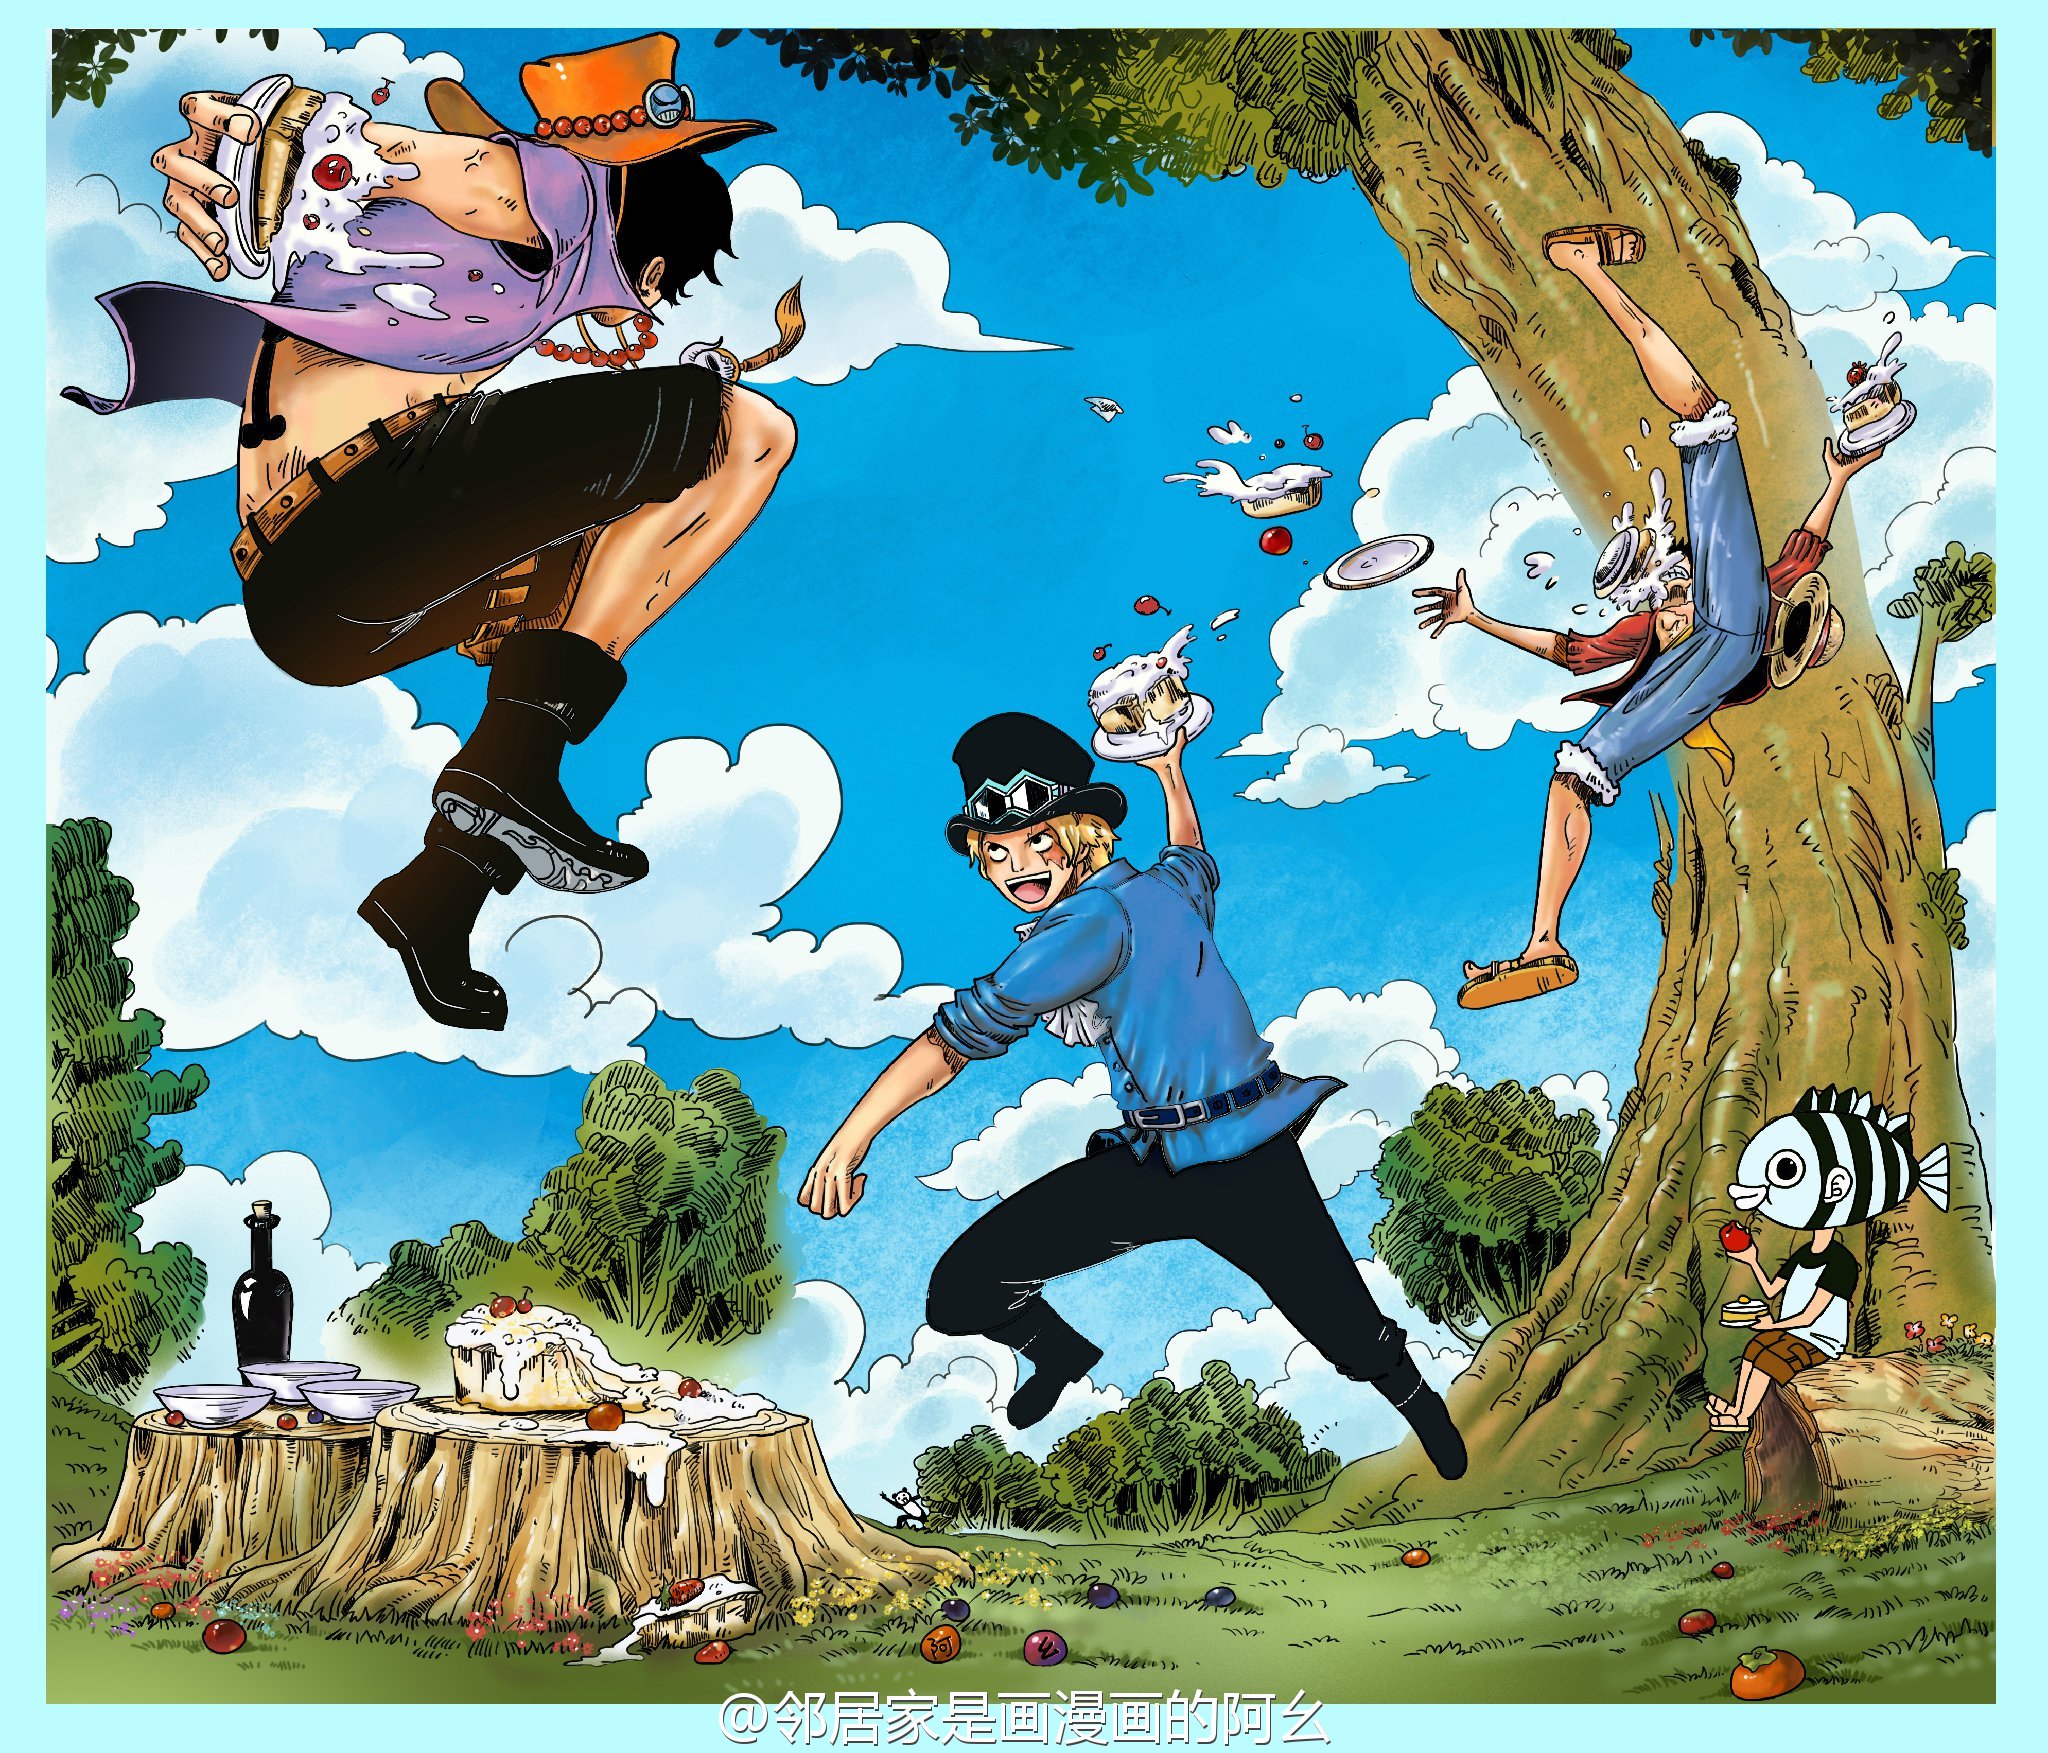 Download 70 Wallpaper One Piece Asl terbaru 2019